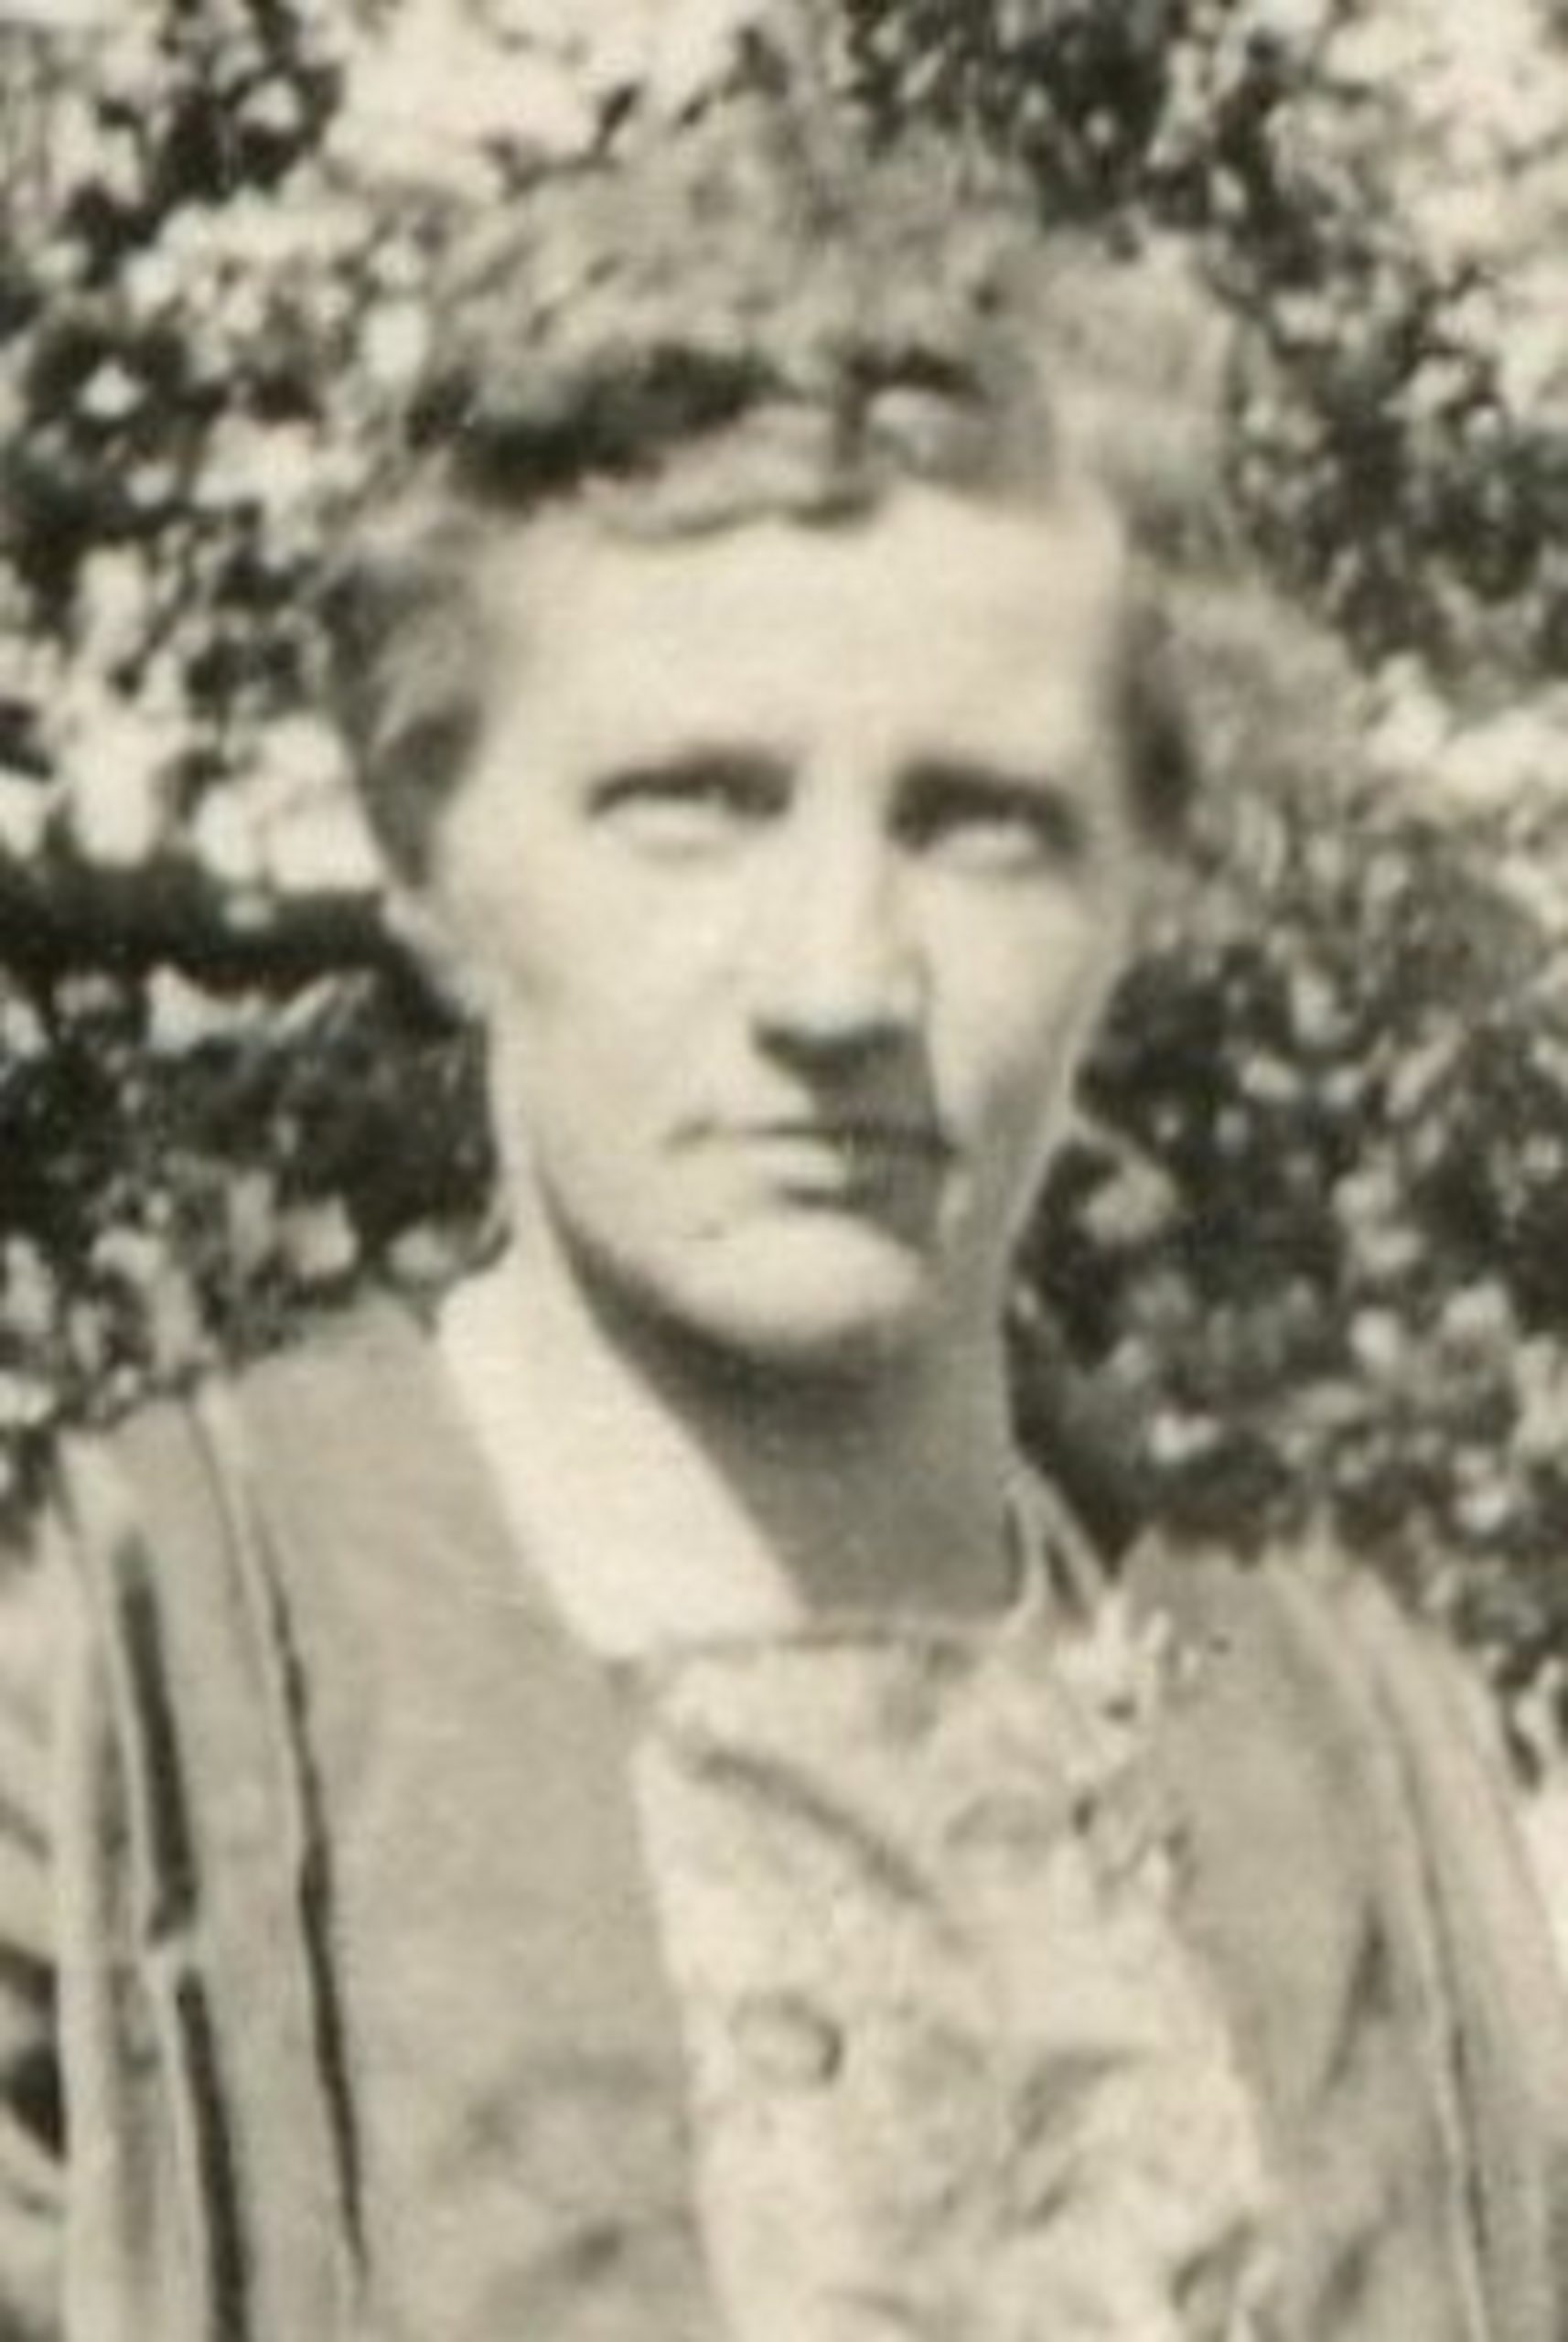 Frieda H. Lemke born 11 Feb (143 years ago)